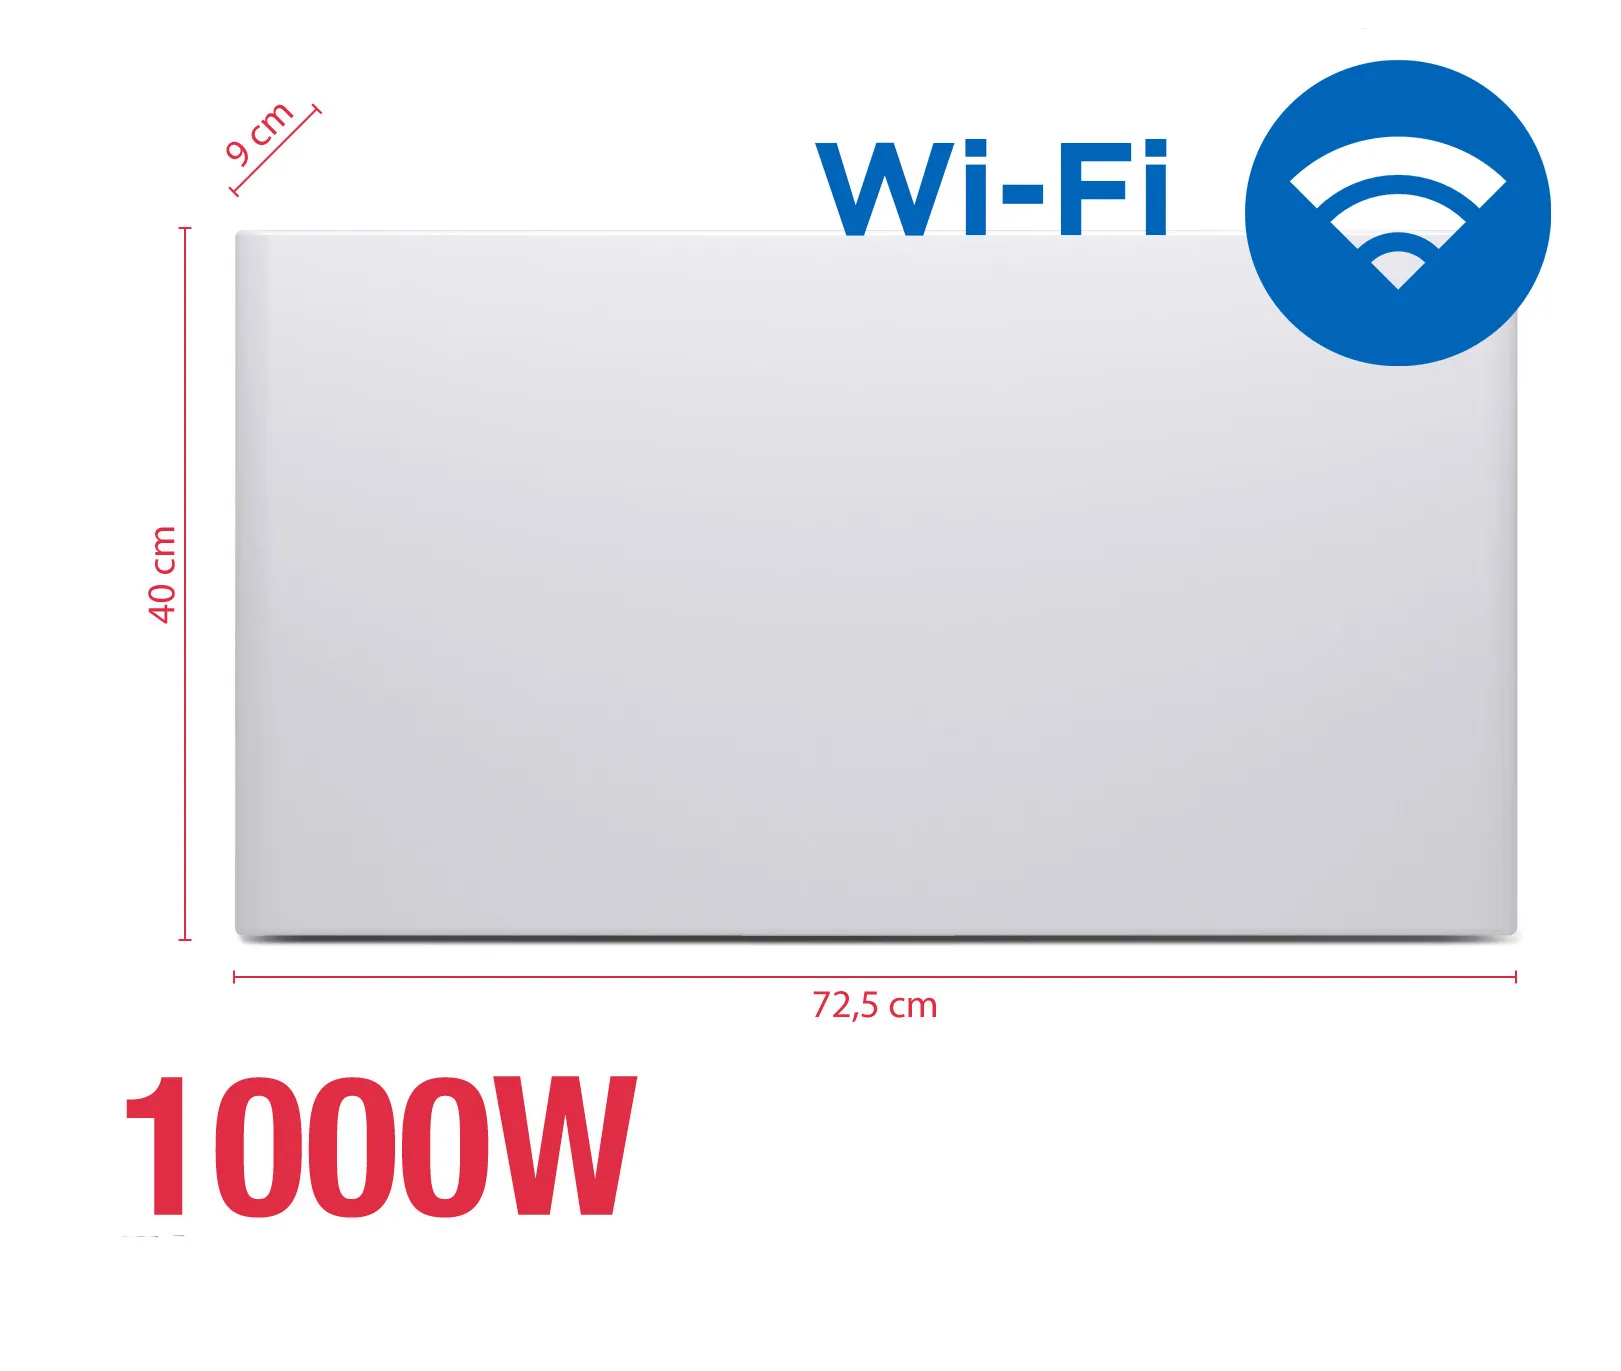 Dimplex Wi-Fi 1000W